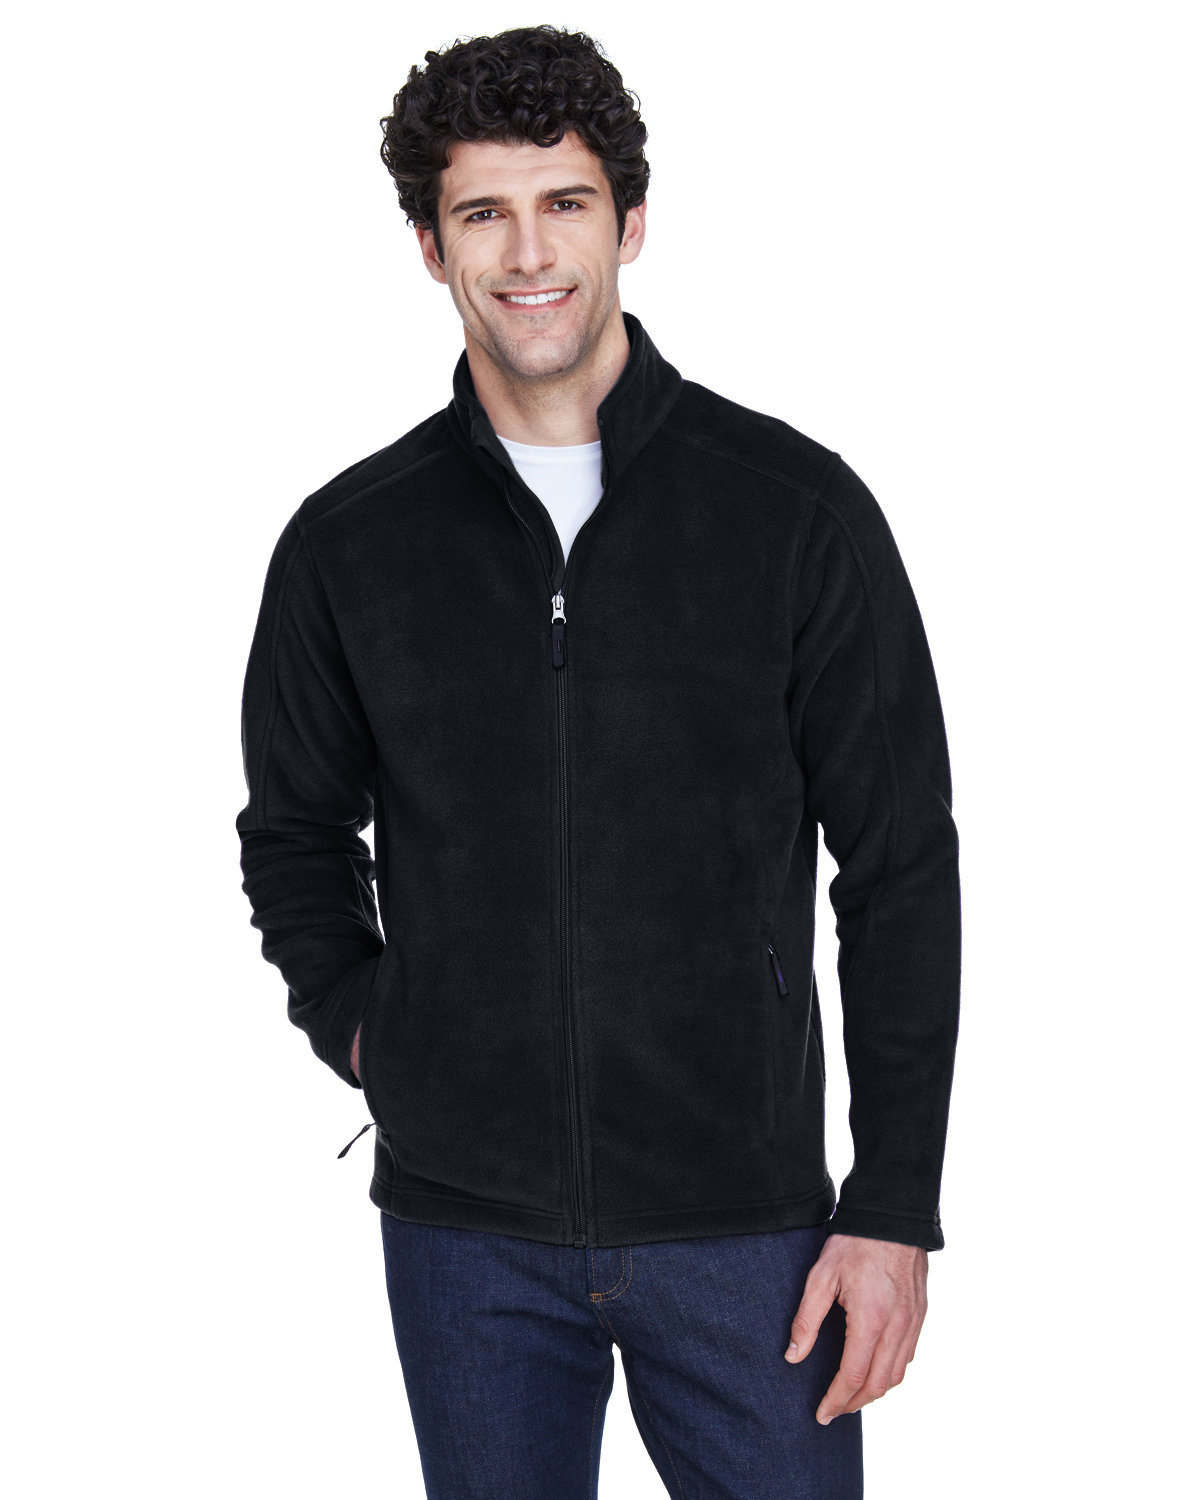 Core 365 Men's Tall Journey Fleece Jacket BLACK 